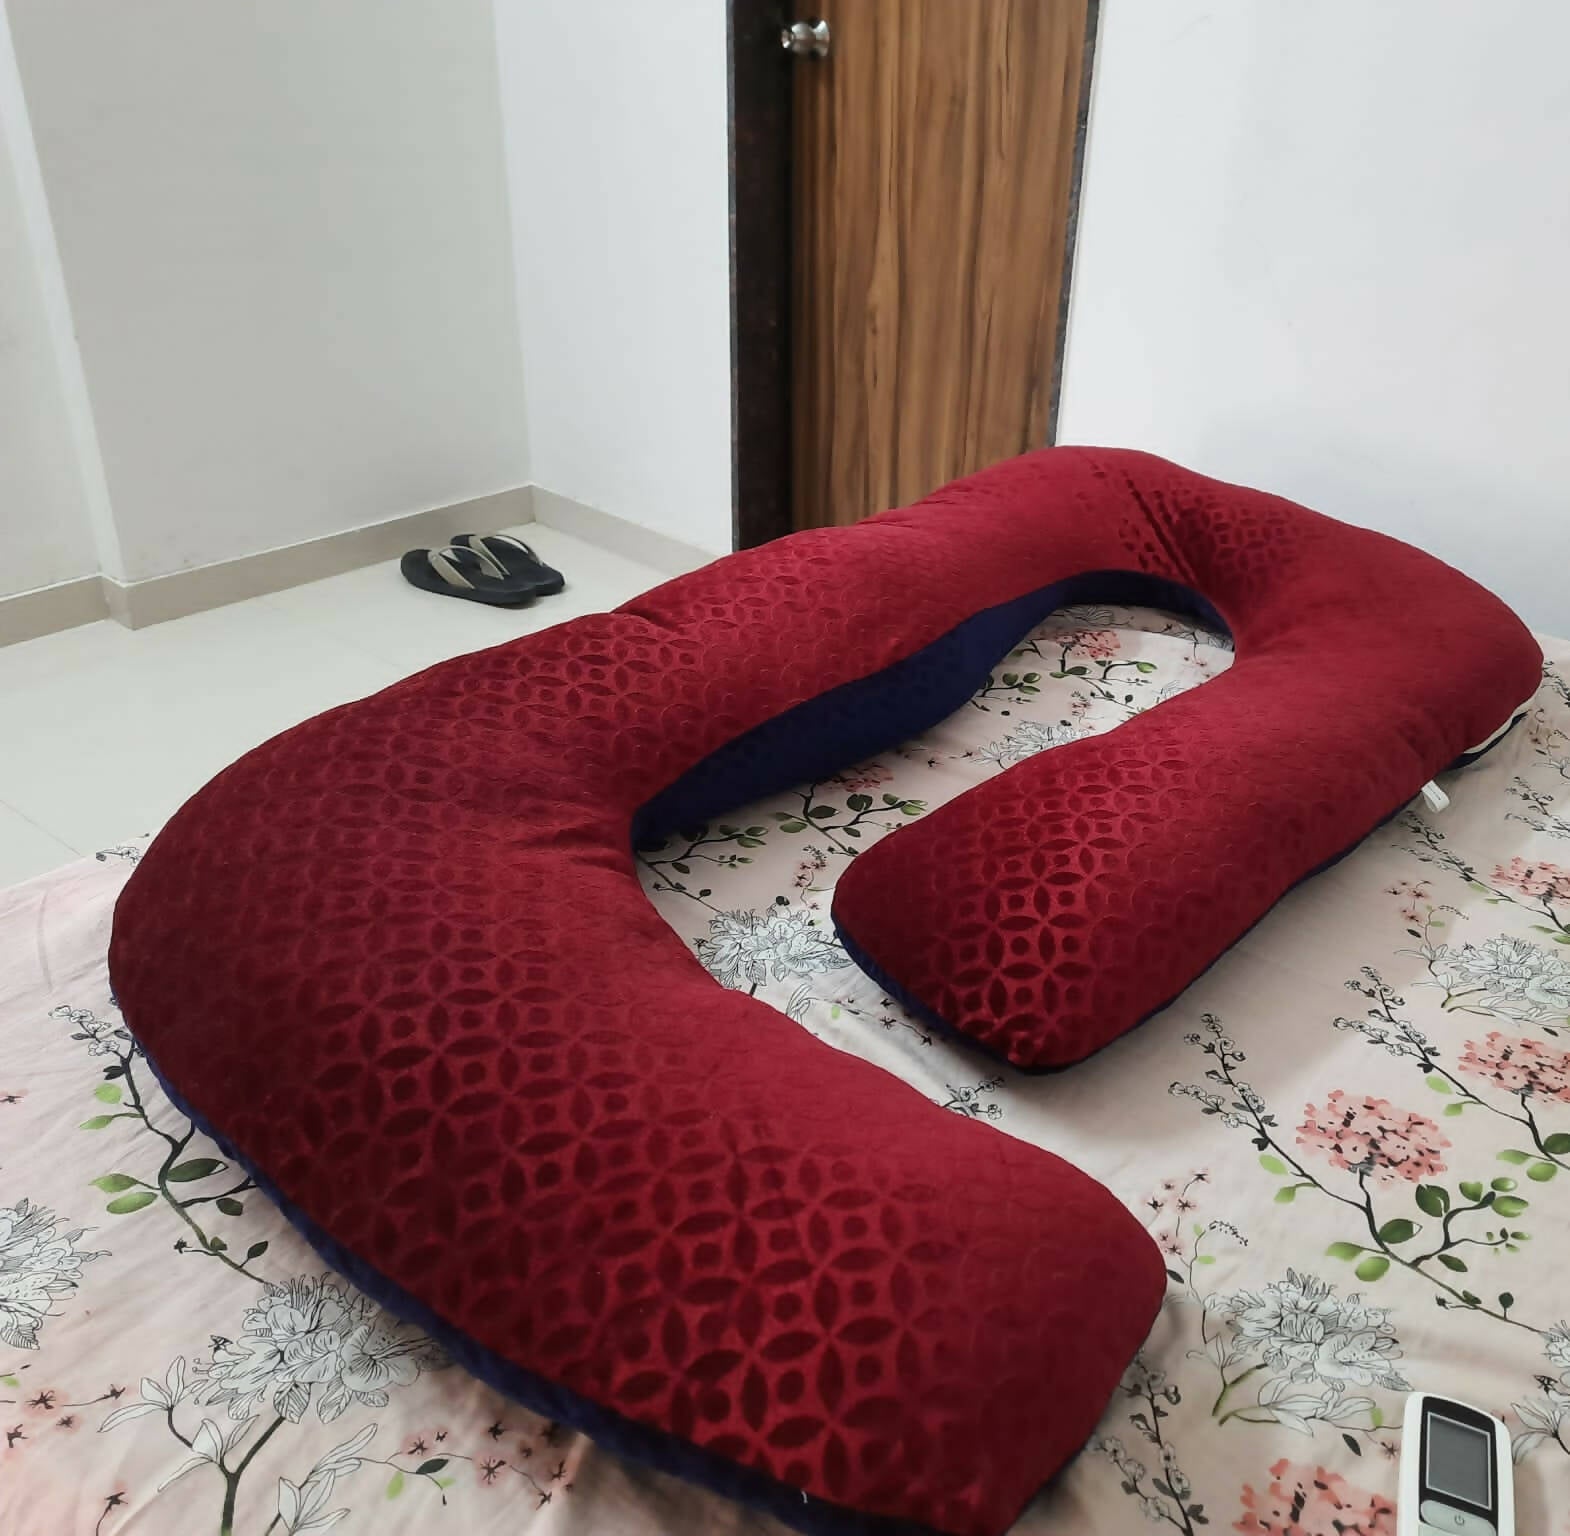 MOM'S MOON Full Body Support Pregnancy Pillow